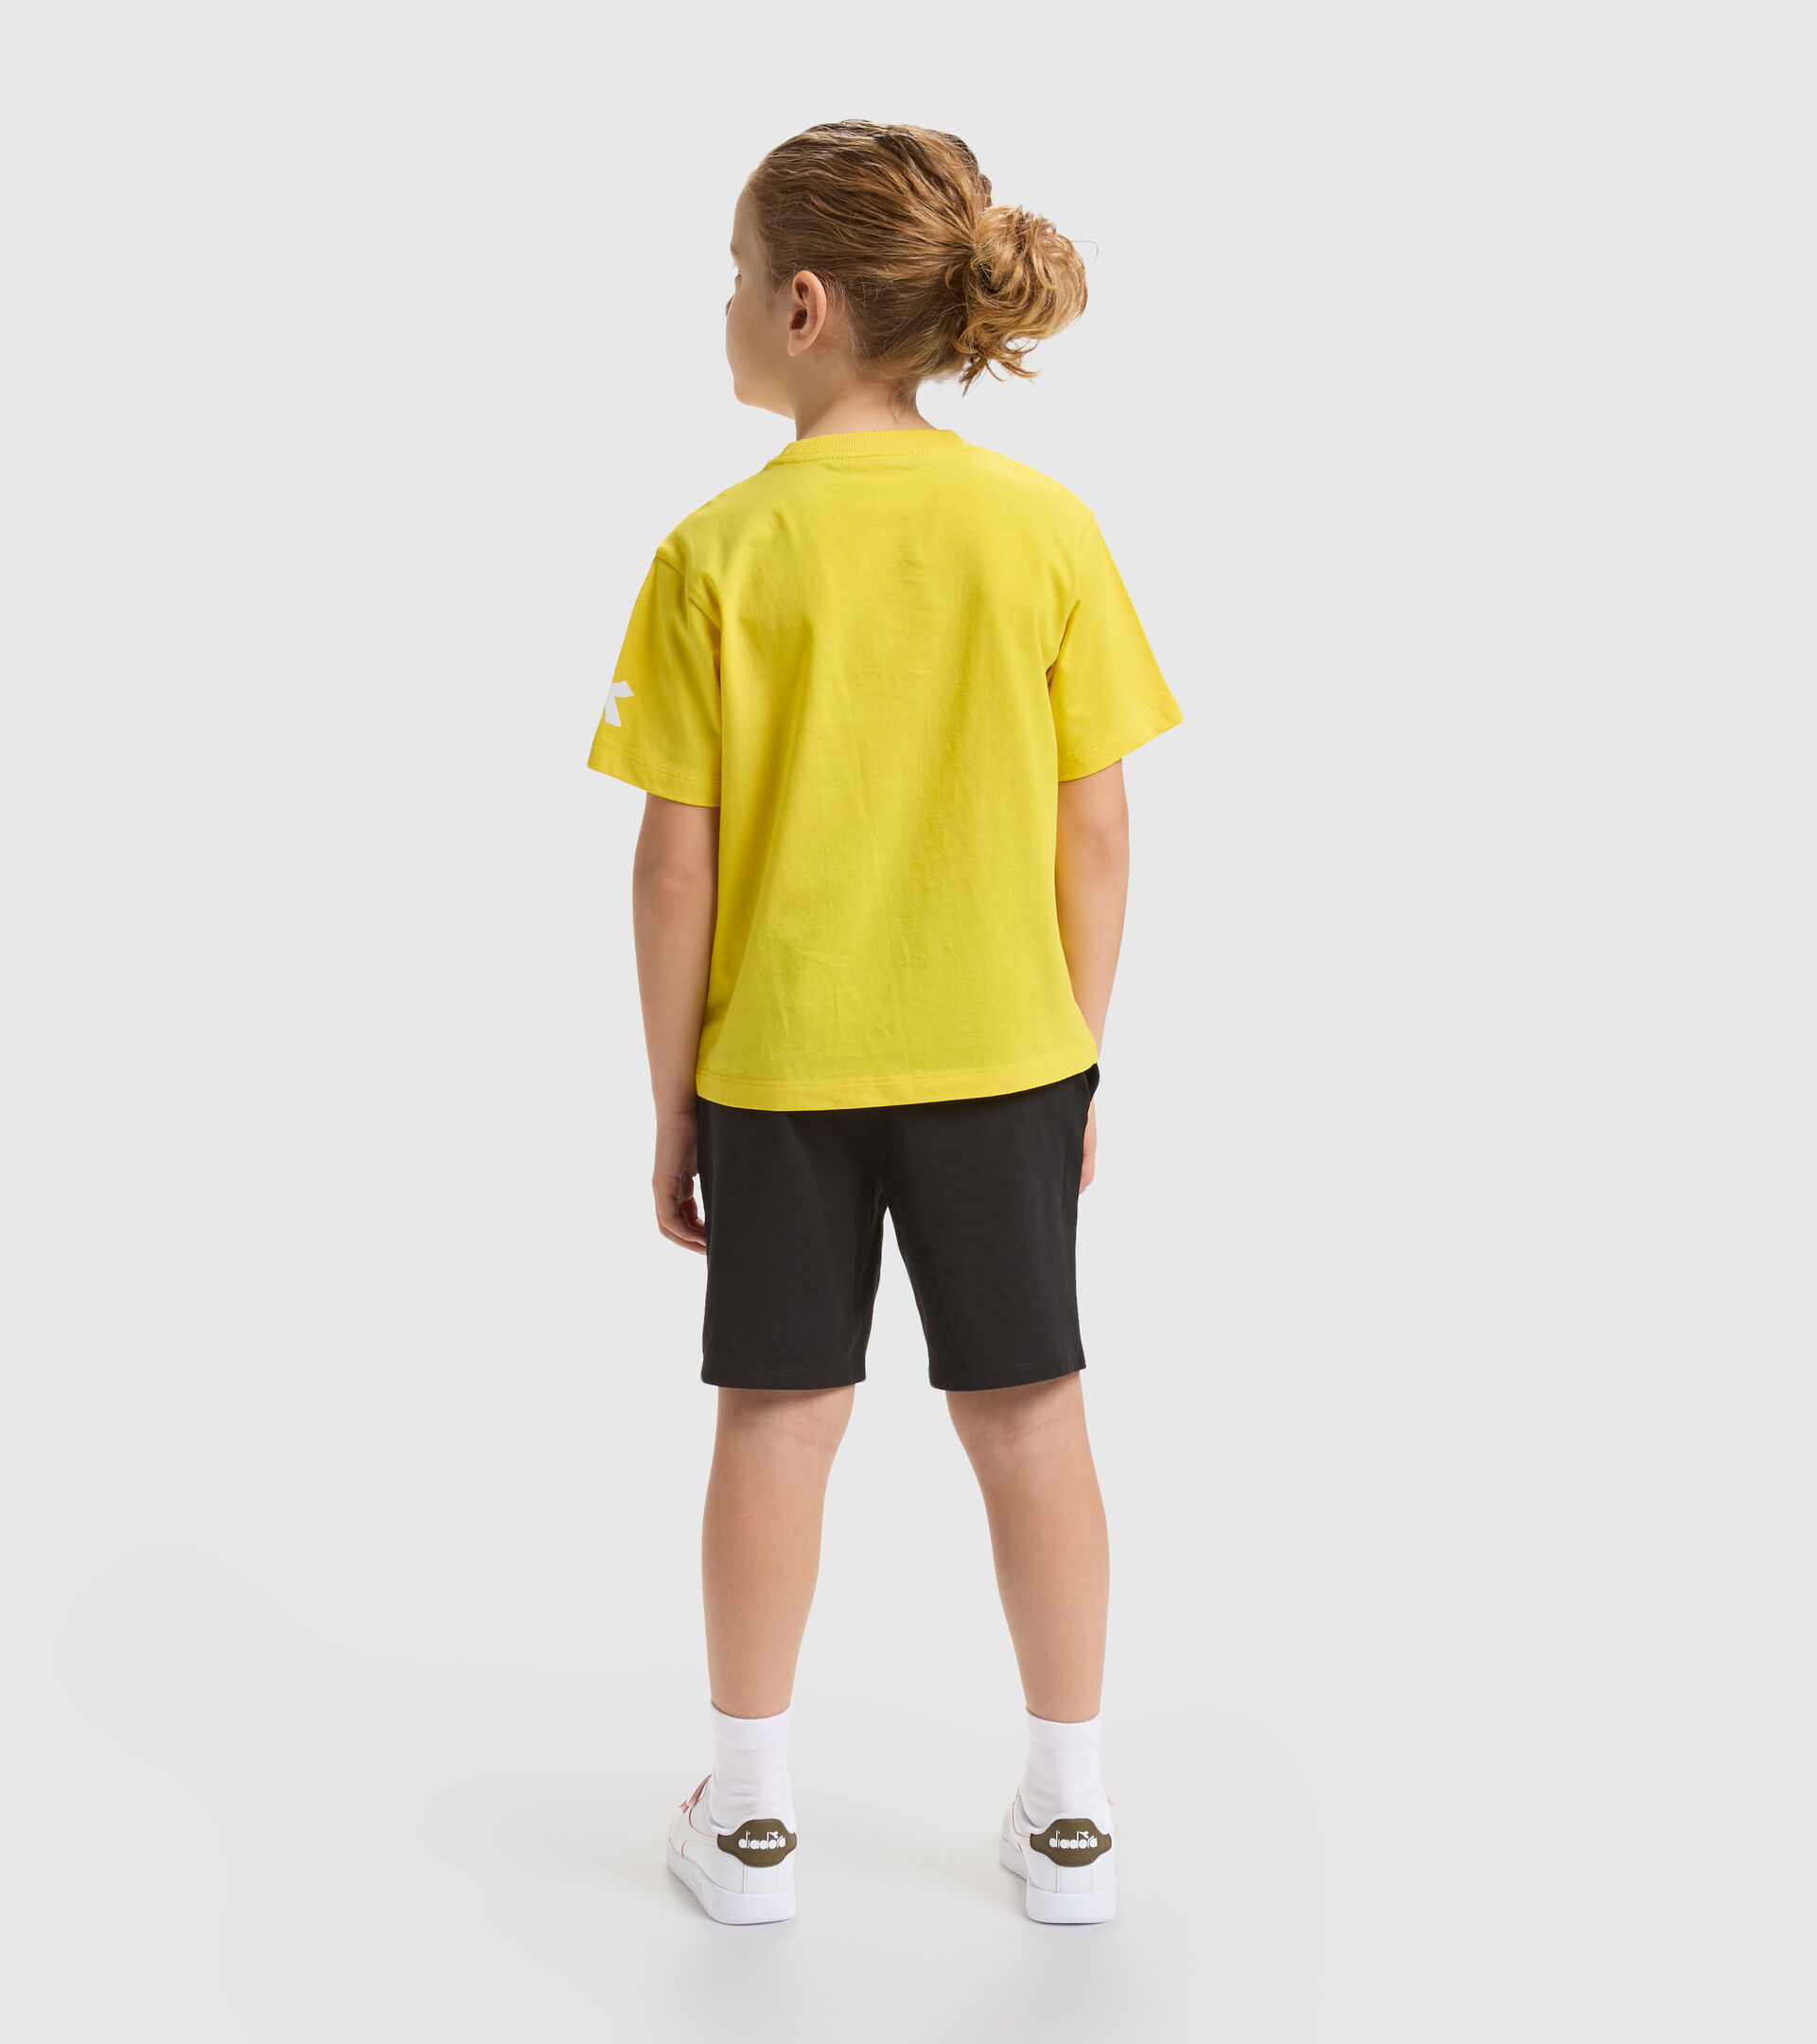 Cotton shorts/T-shirt set - Boys JB.SET SS PLAYGROUND YELLOW LENS - Diadora